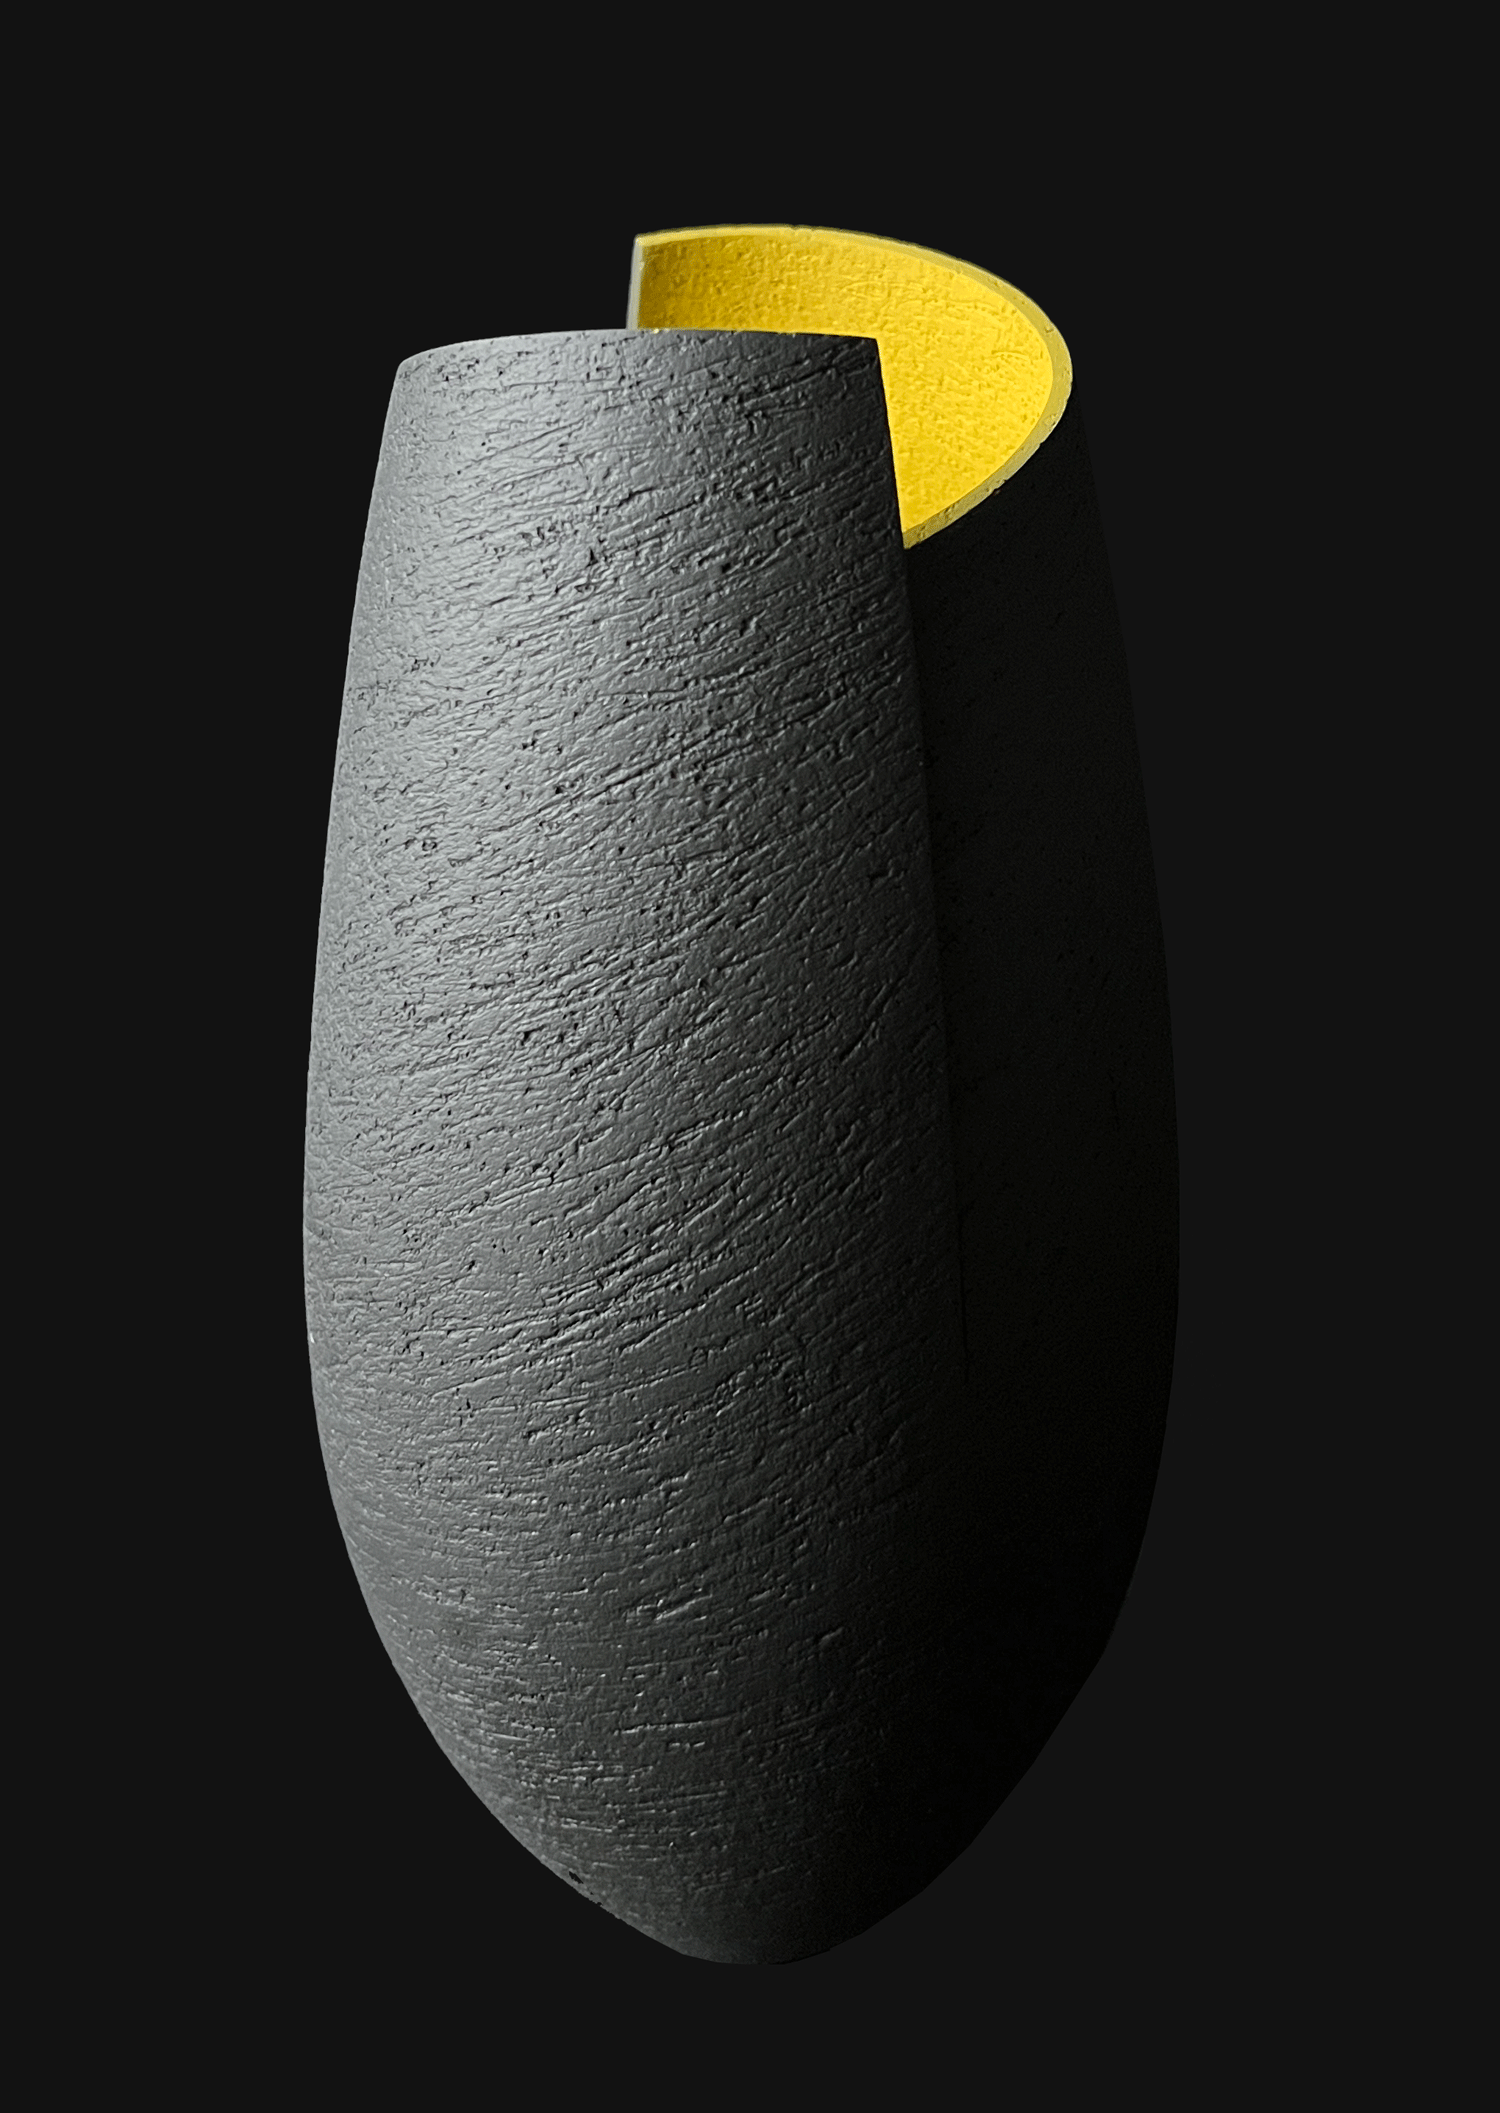 Ashraf Hanna - Black & Yellow Cut & Altered Vessel